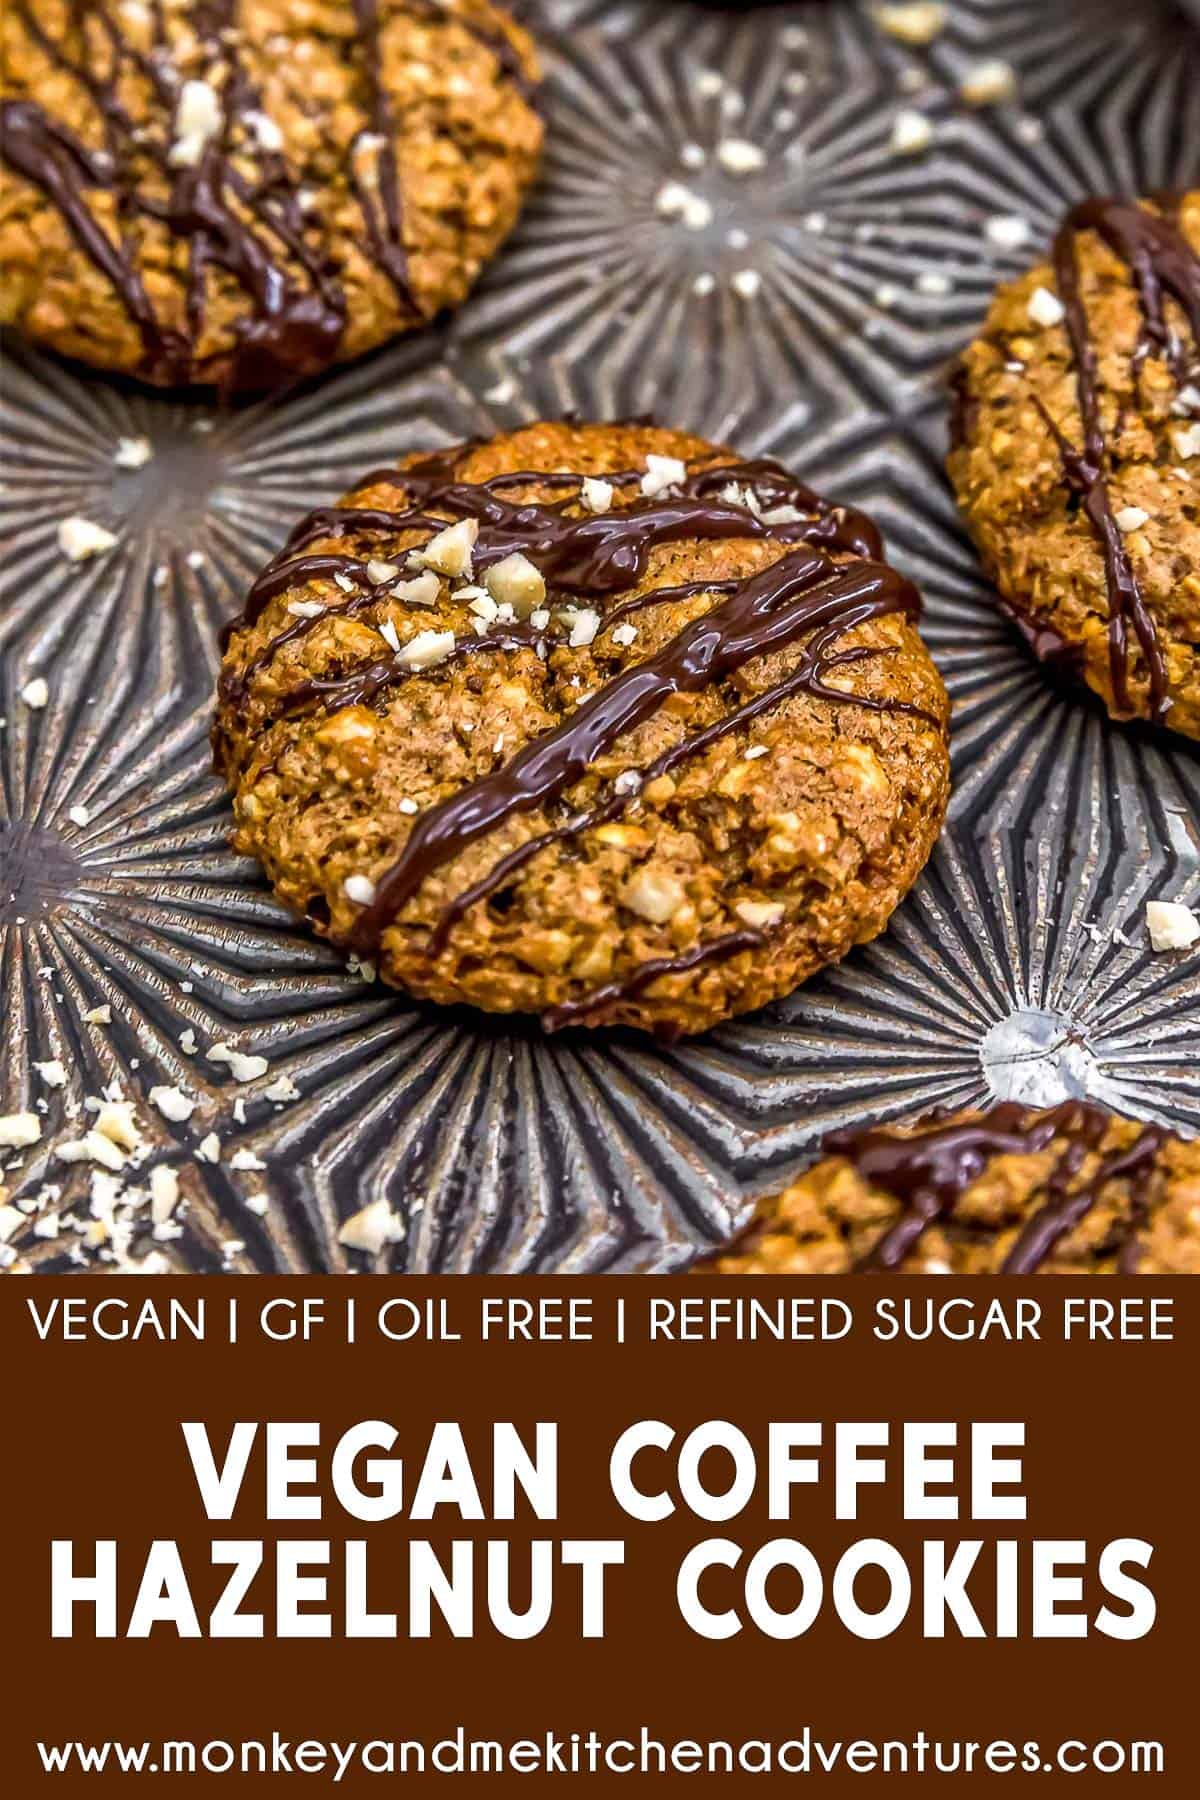 Vegan Coffee Hazelnut Cookies with text description